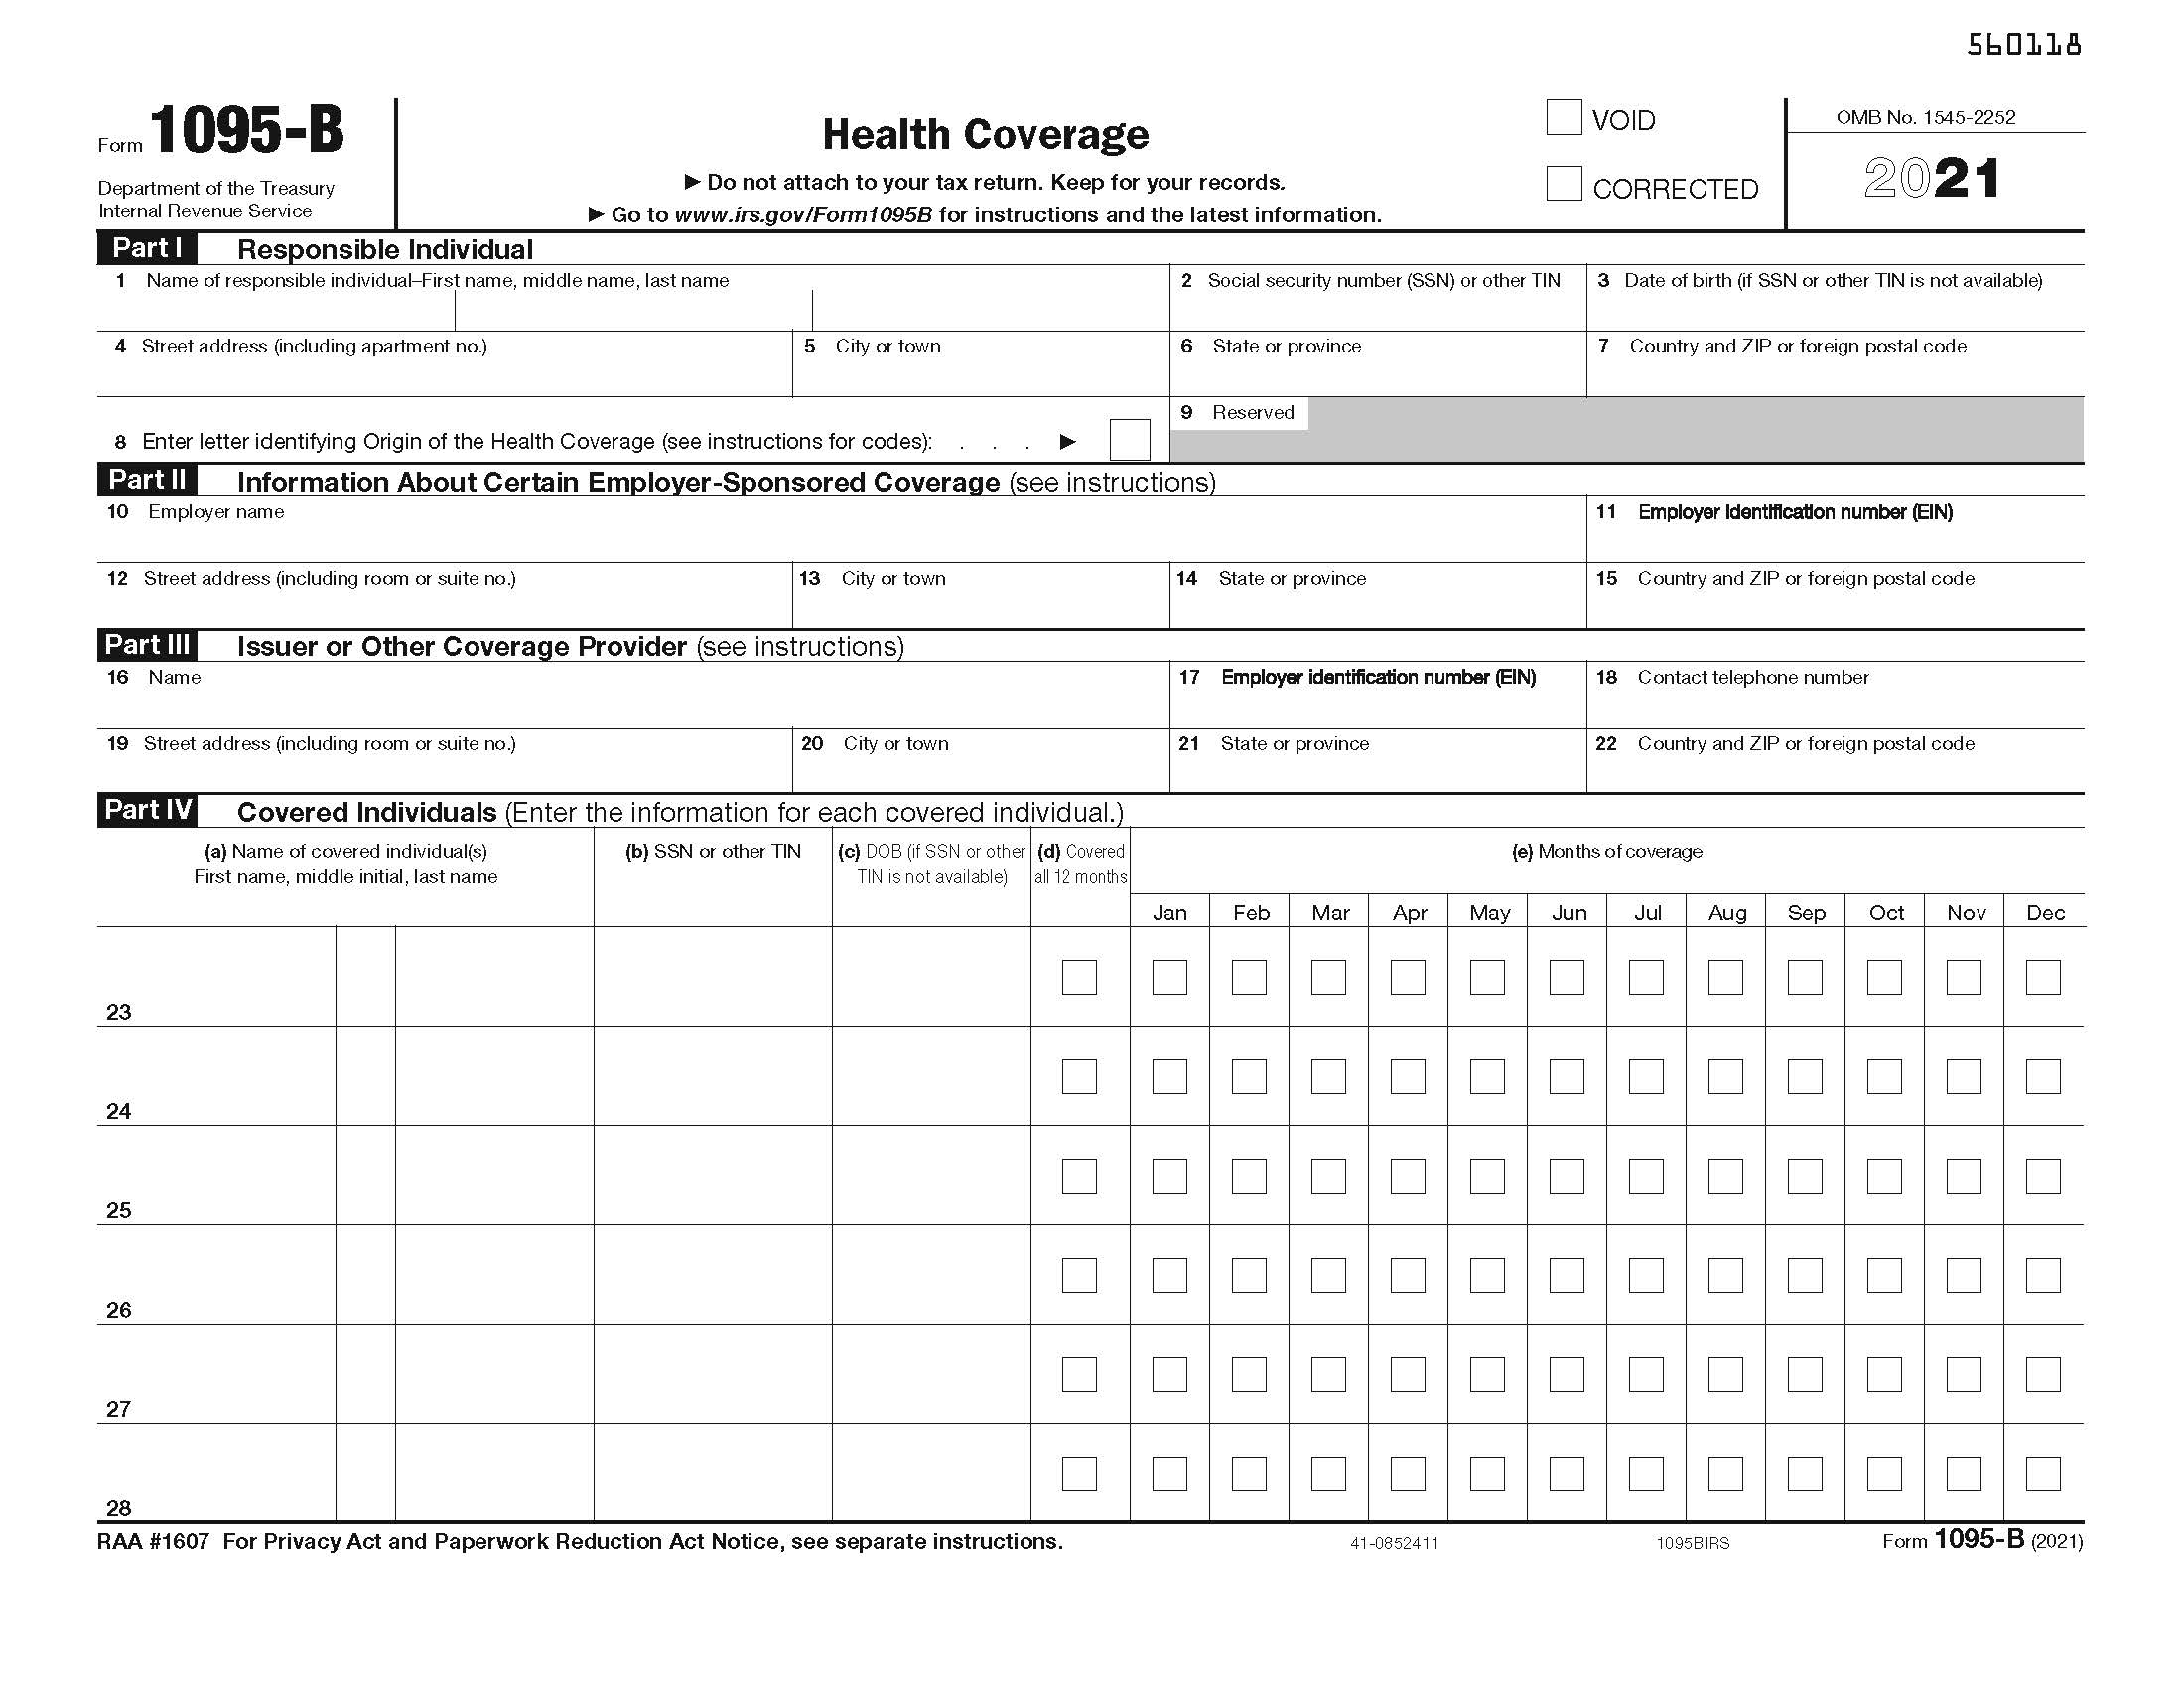 1095-B IRS Copy Health Coverage